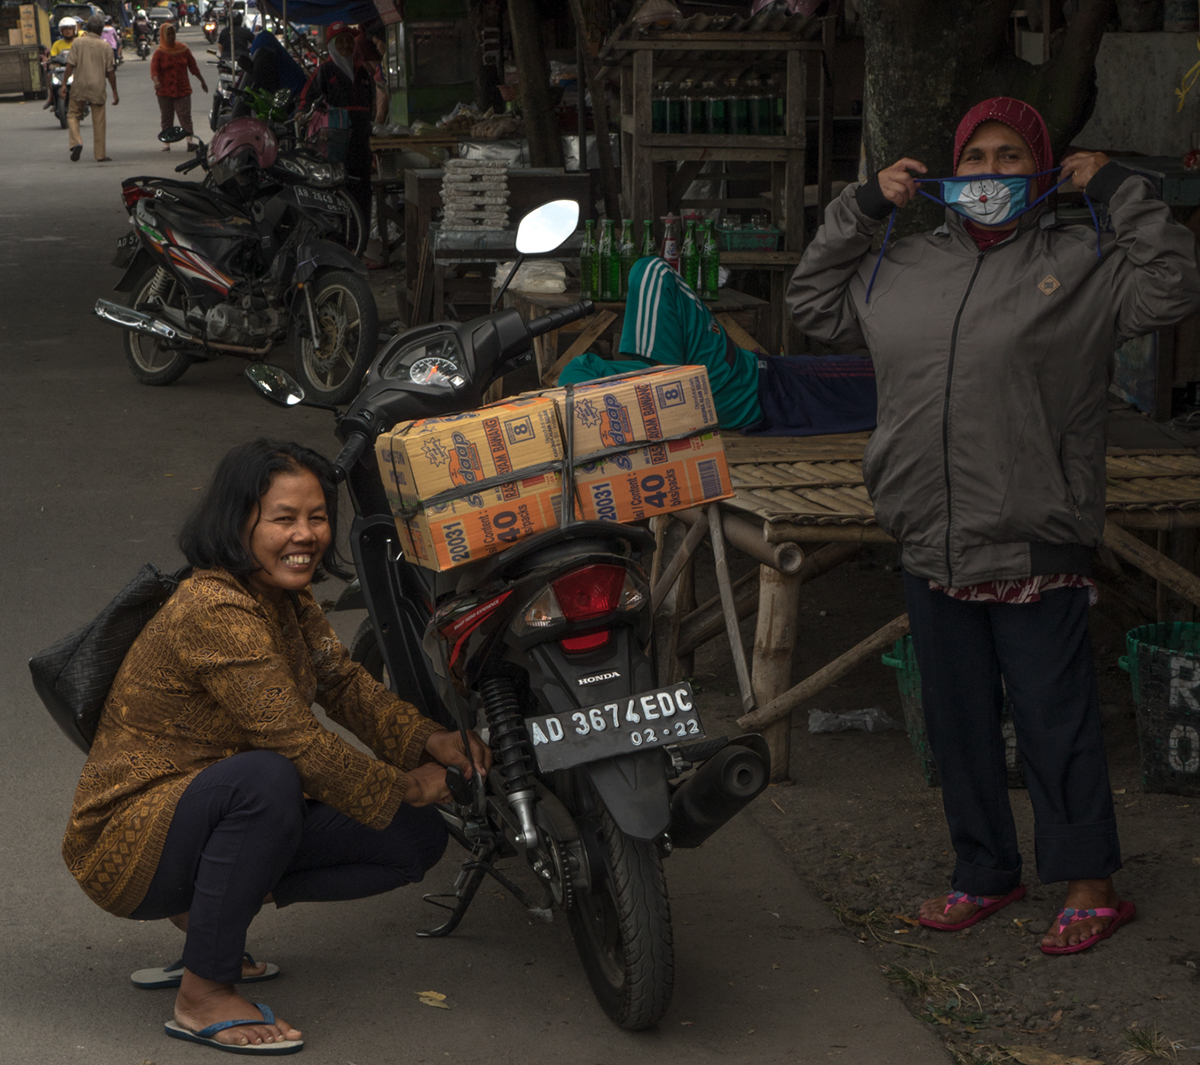 indonesia jogjakarta asia java street photography SONY DSC RX10 adventure Travel volcano intriguing